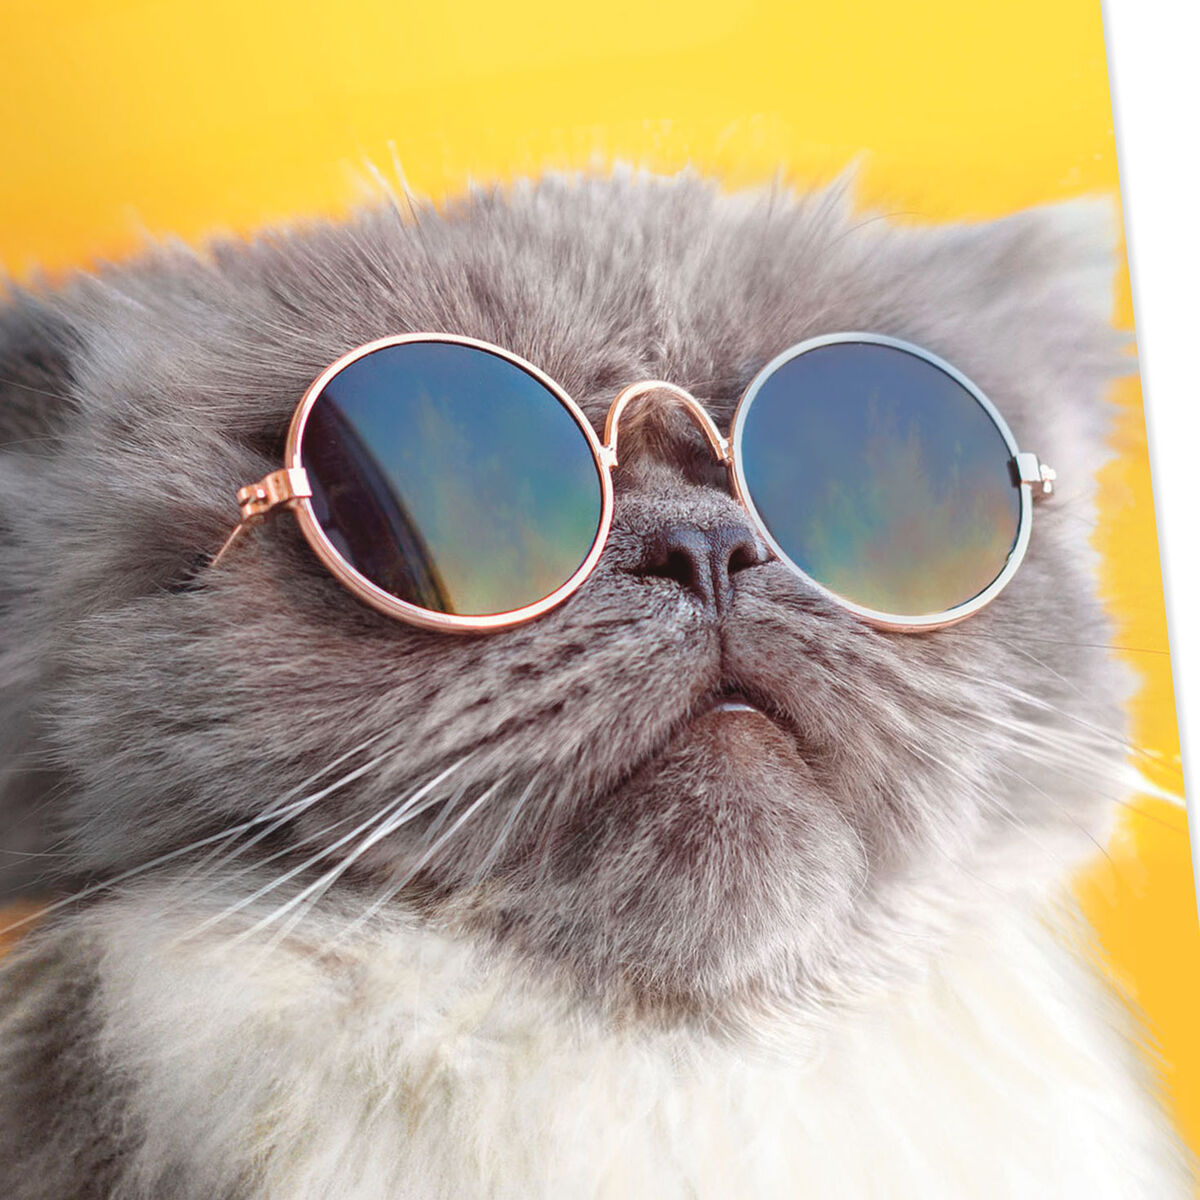 Cat in Sunglasses Funny Birthday Card - Greeting Cards - Hallmark